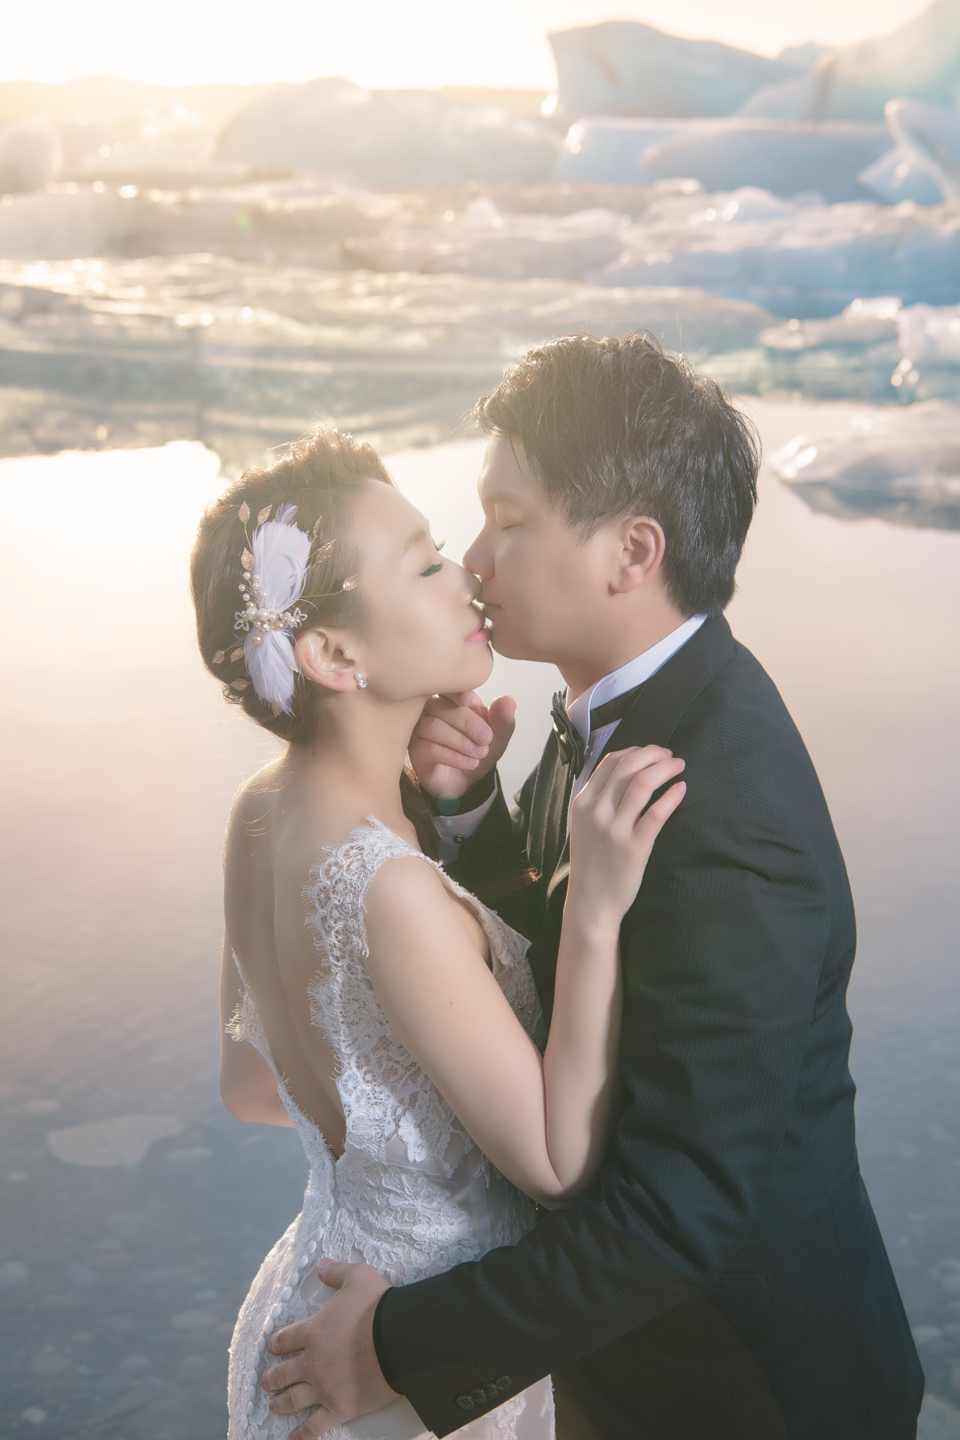 冰島婚紗, 海外婚紗, 婚攝東法, 藝術影像, Donfer, Donfer Photography, EASTERN WEDDING